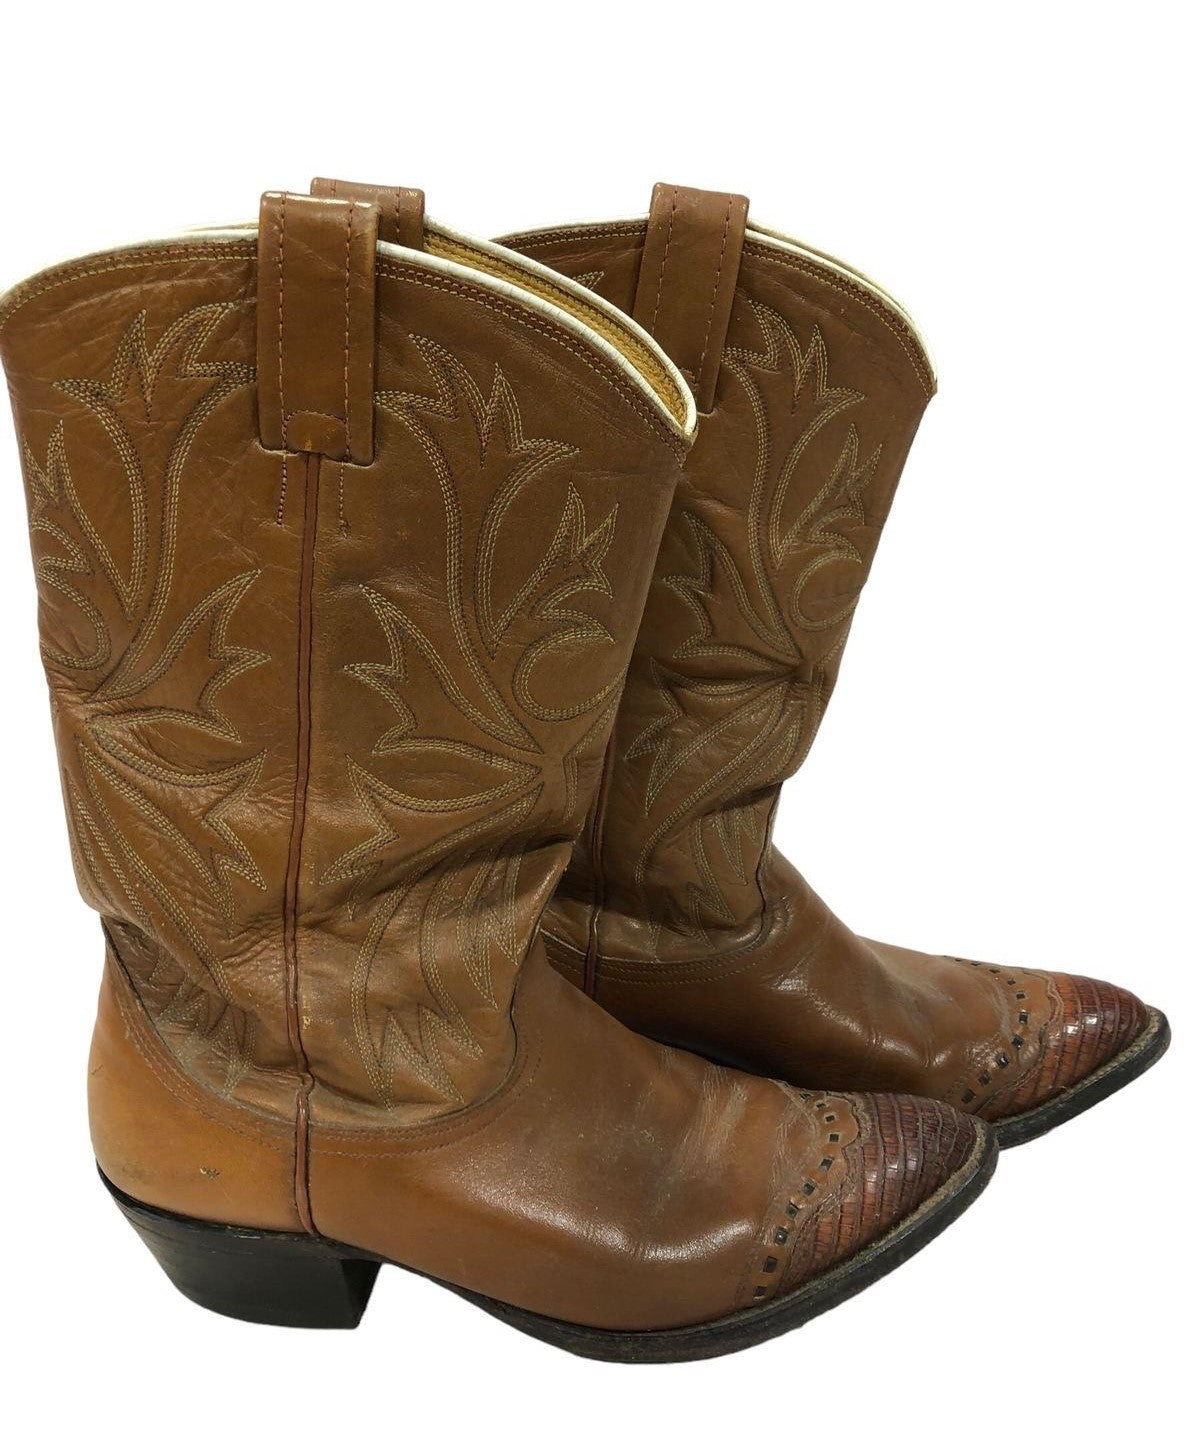 Nocona Leather Western Cowboy Boots Sz 8.5D